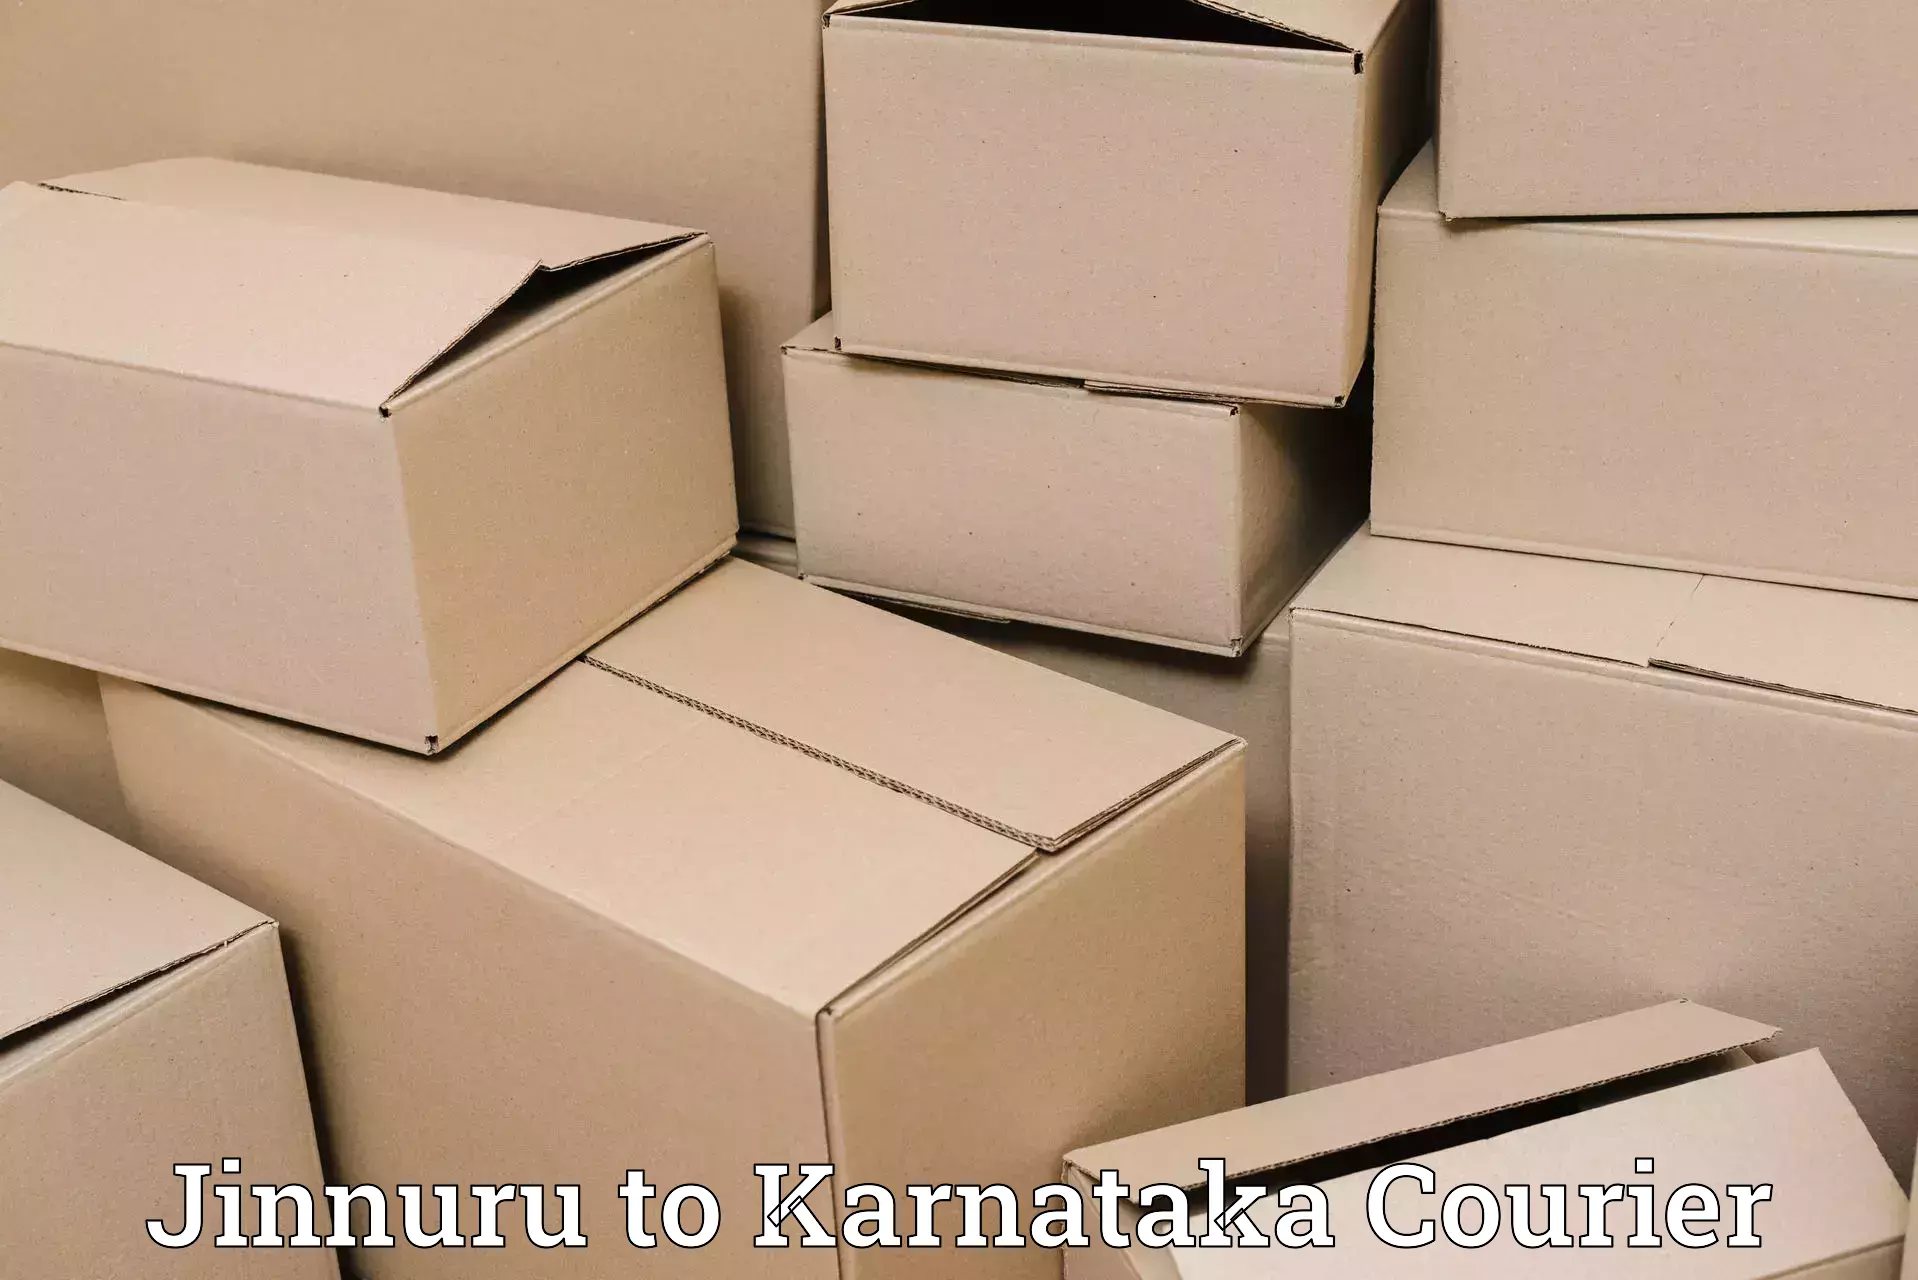 Nationwide courier service Jinnuru to Lingasugur